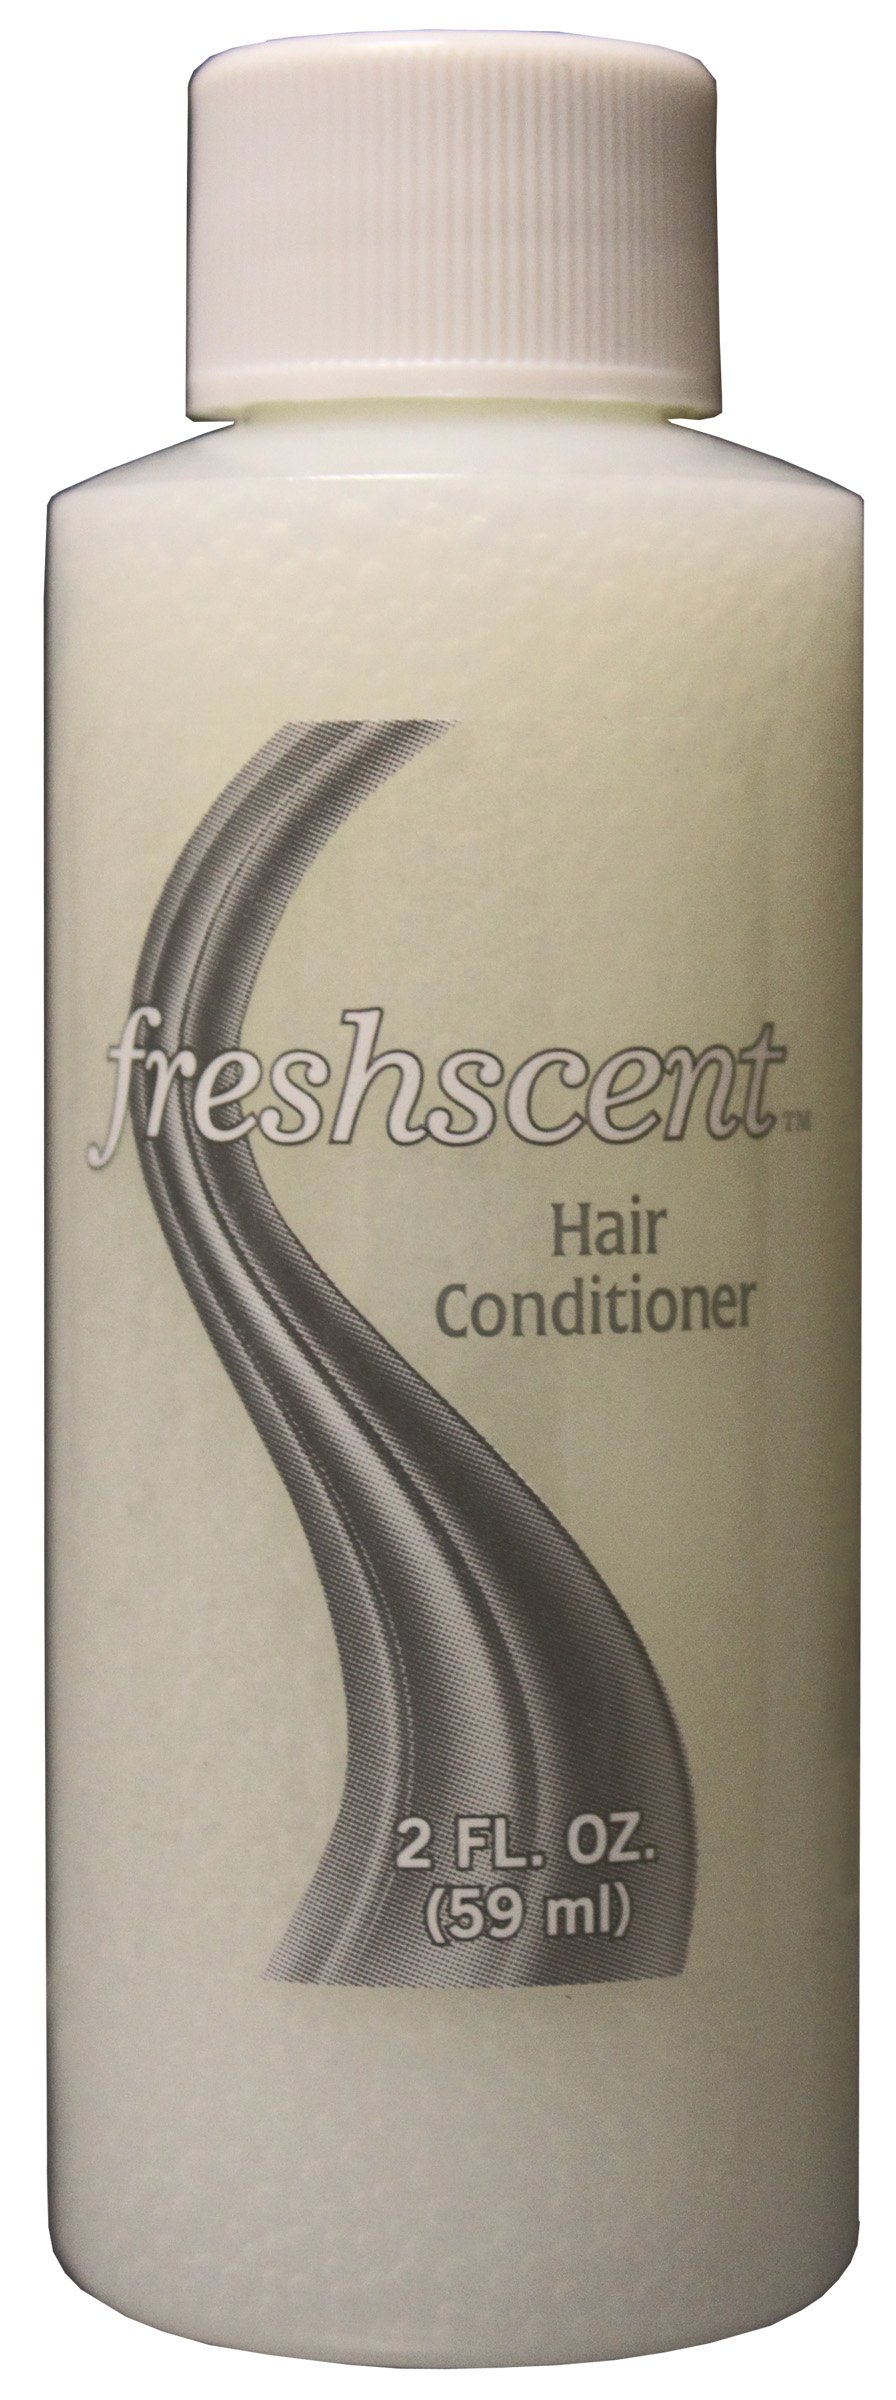 Freshscent 2 oz. Hair Conditioner